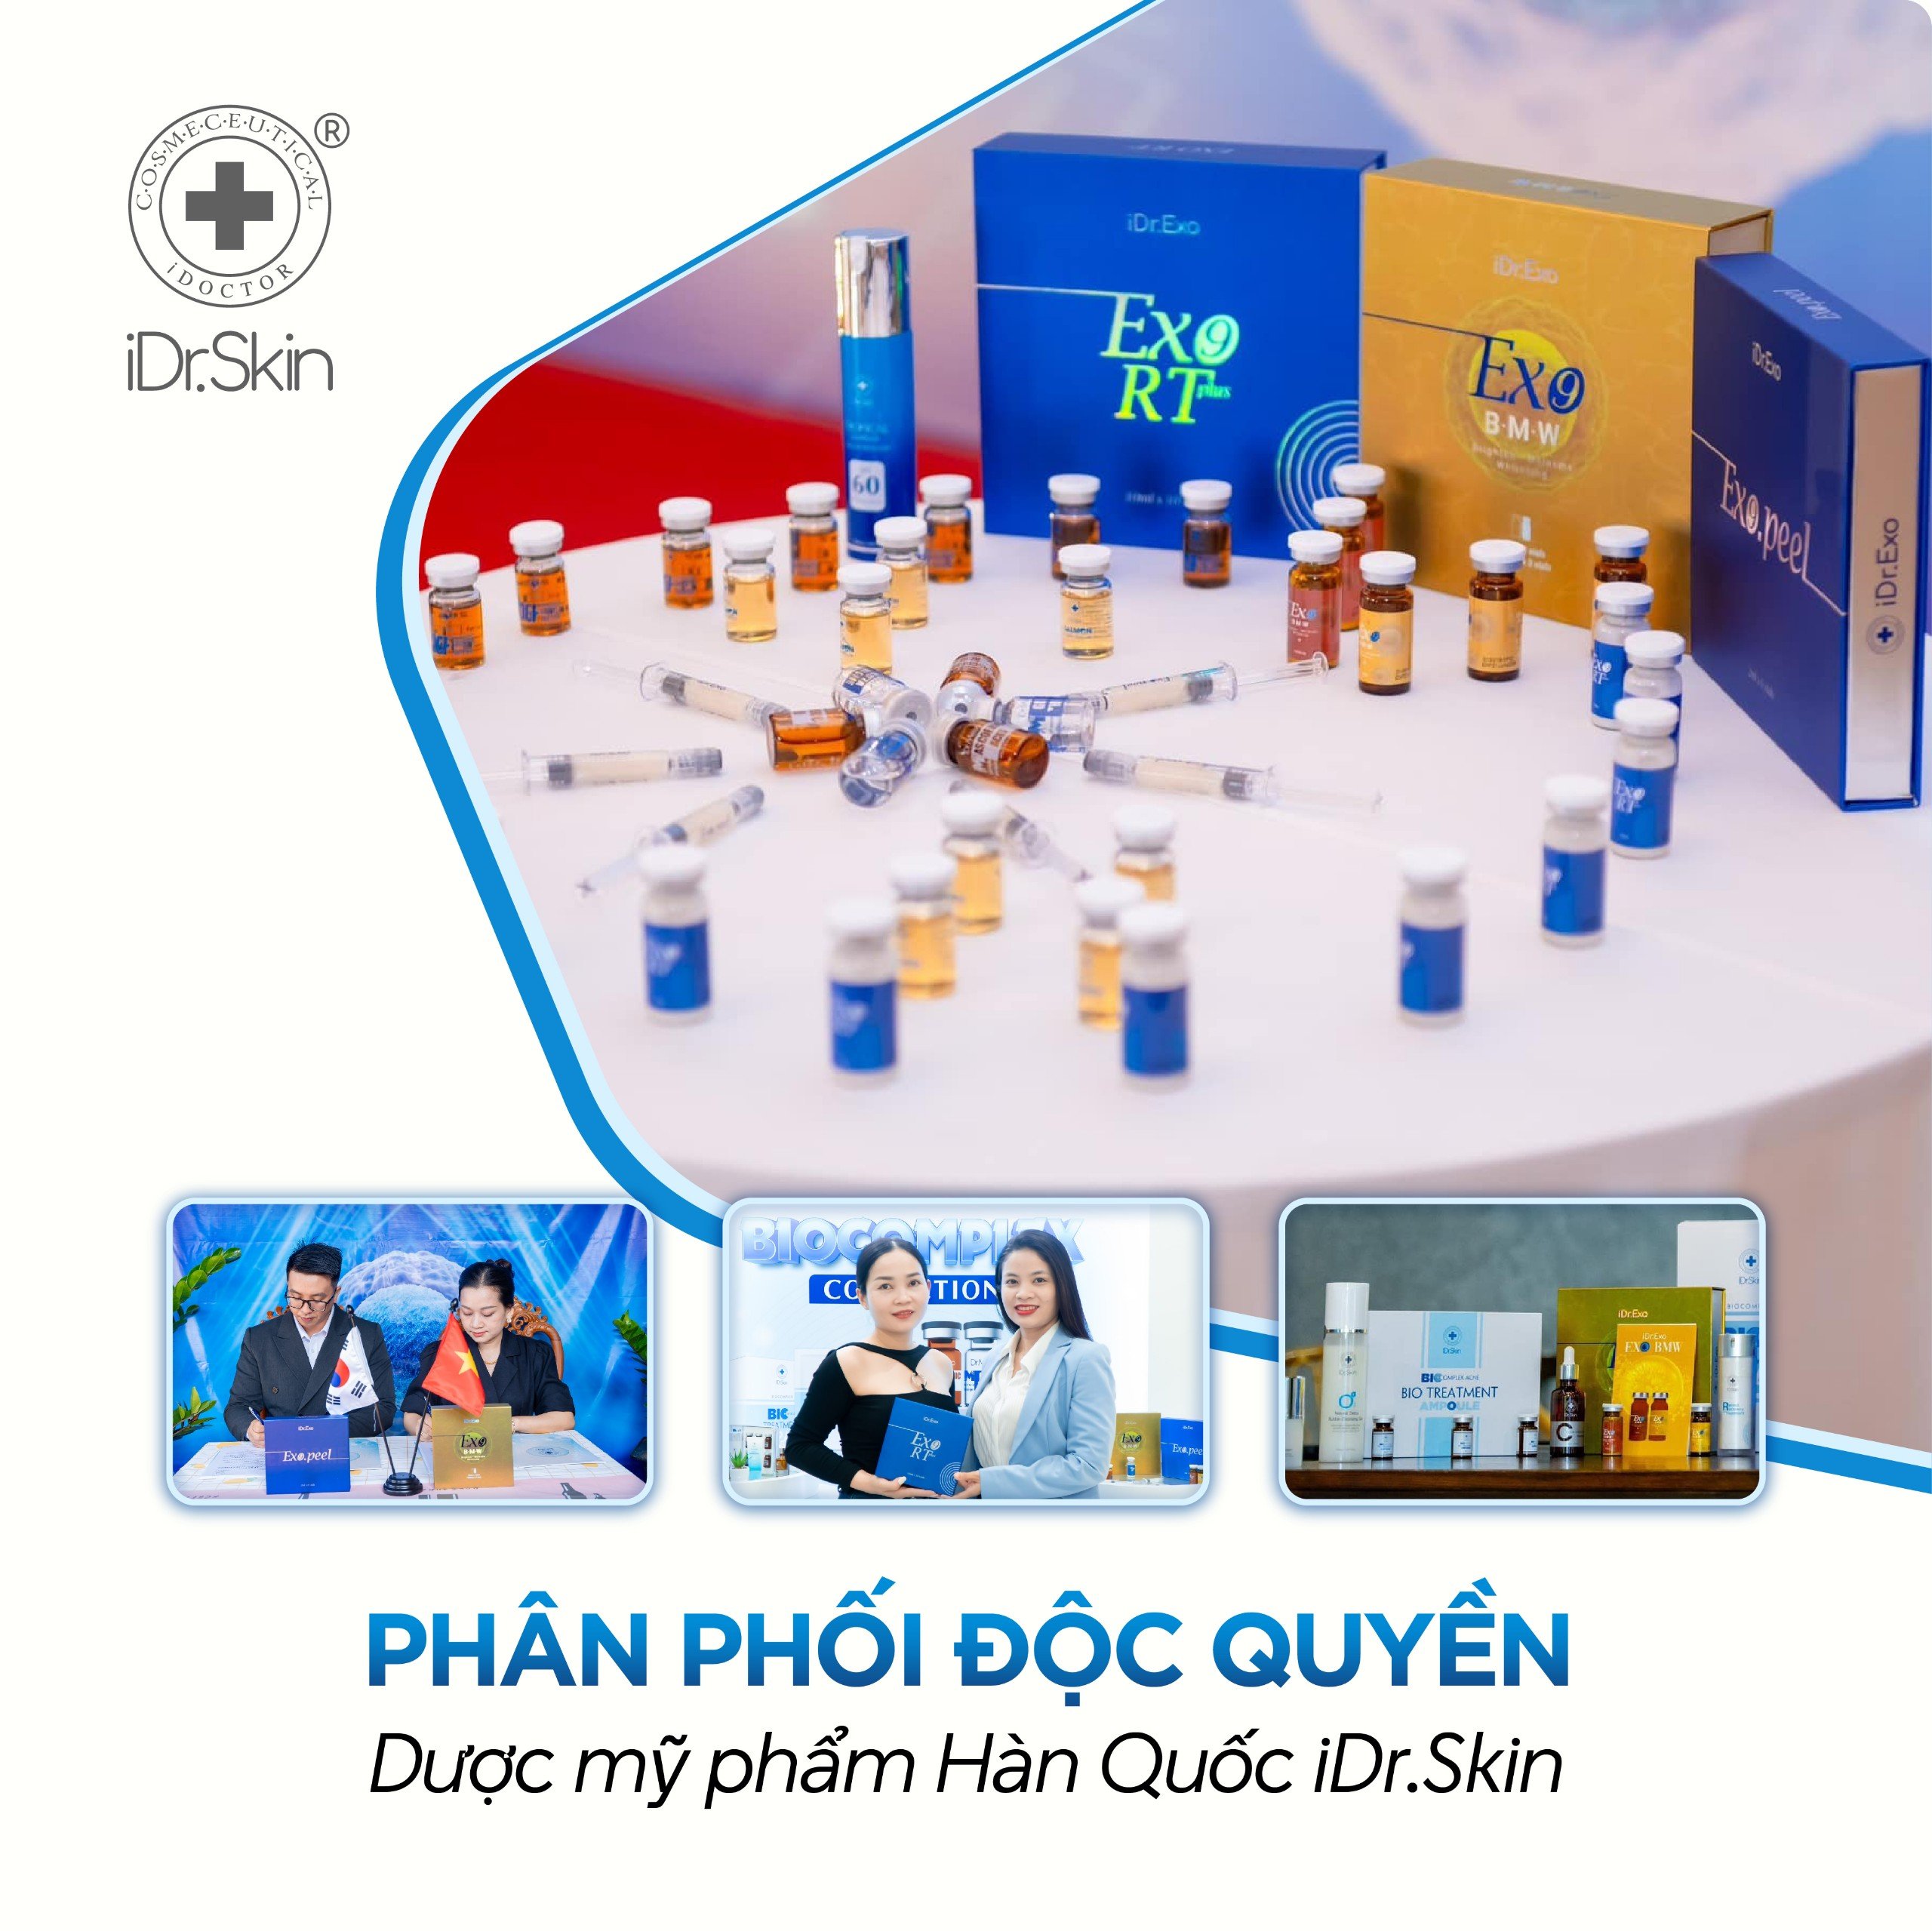 phan-phoi-doc-quyen-duoc-my-pham-idrskin